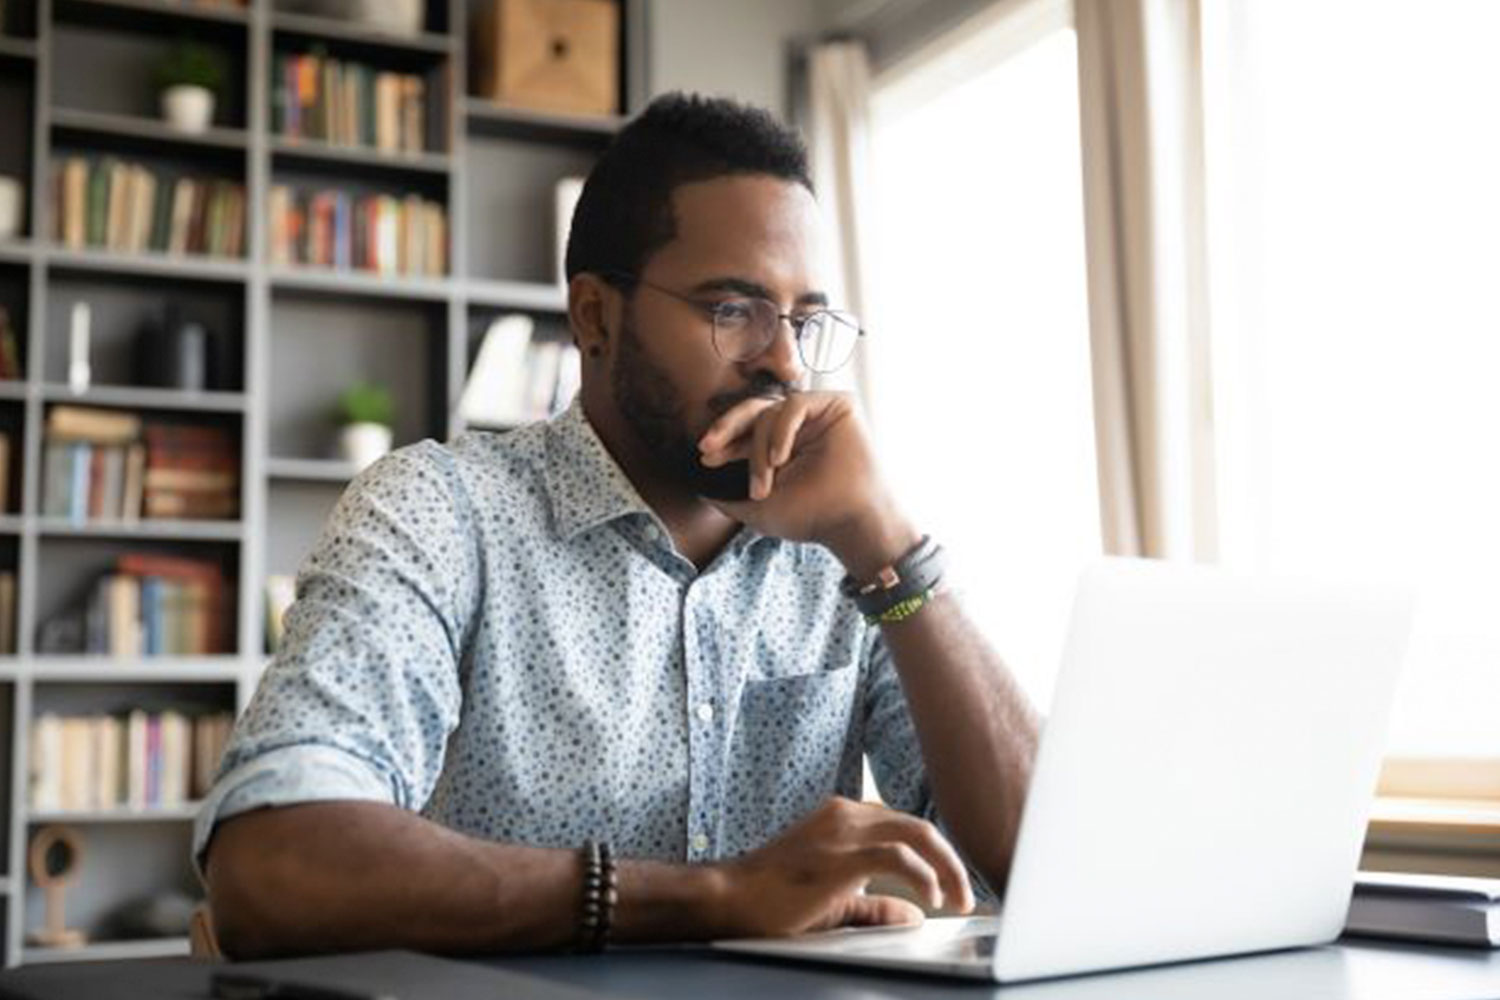 African American man working on laptop